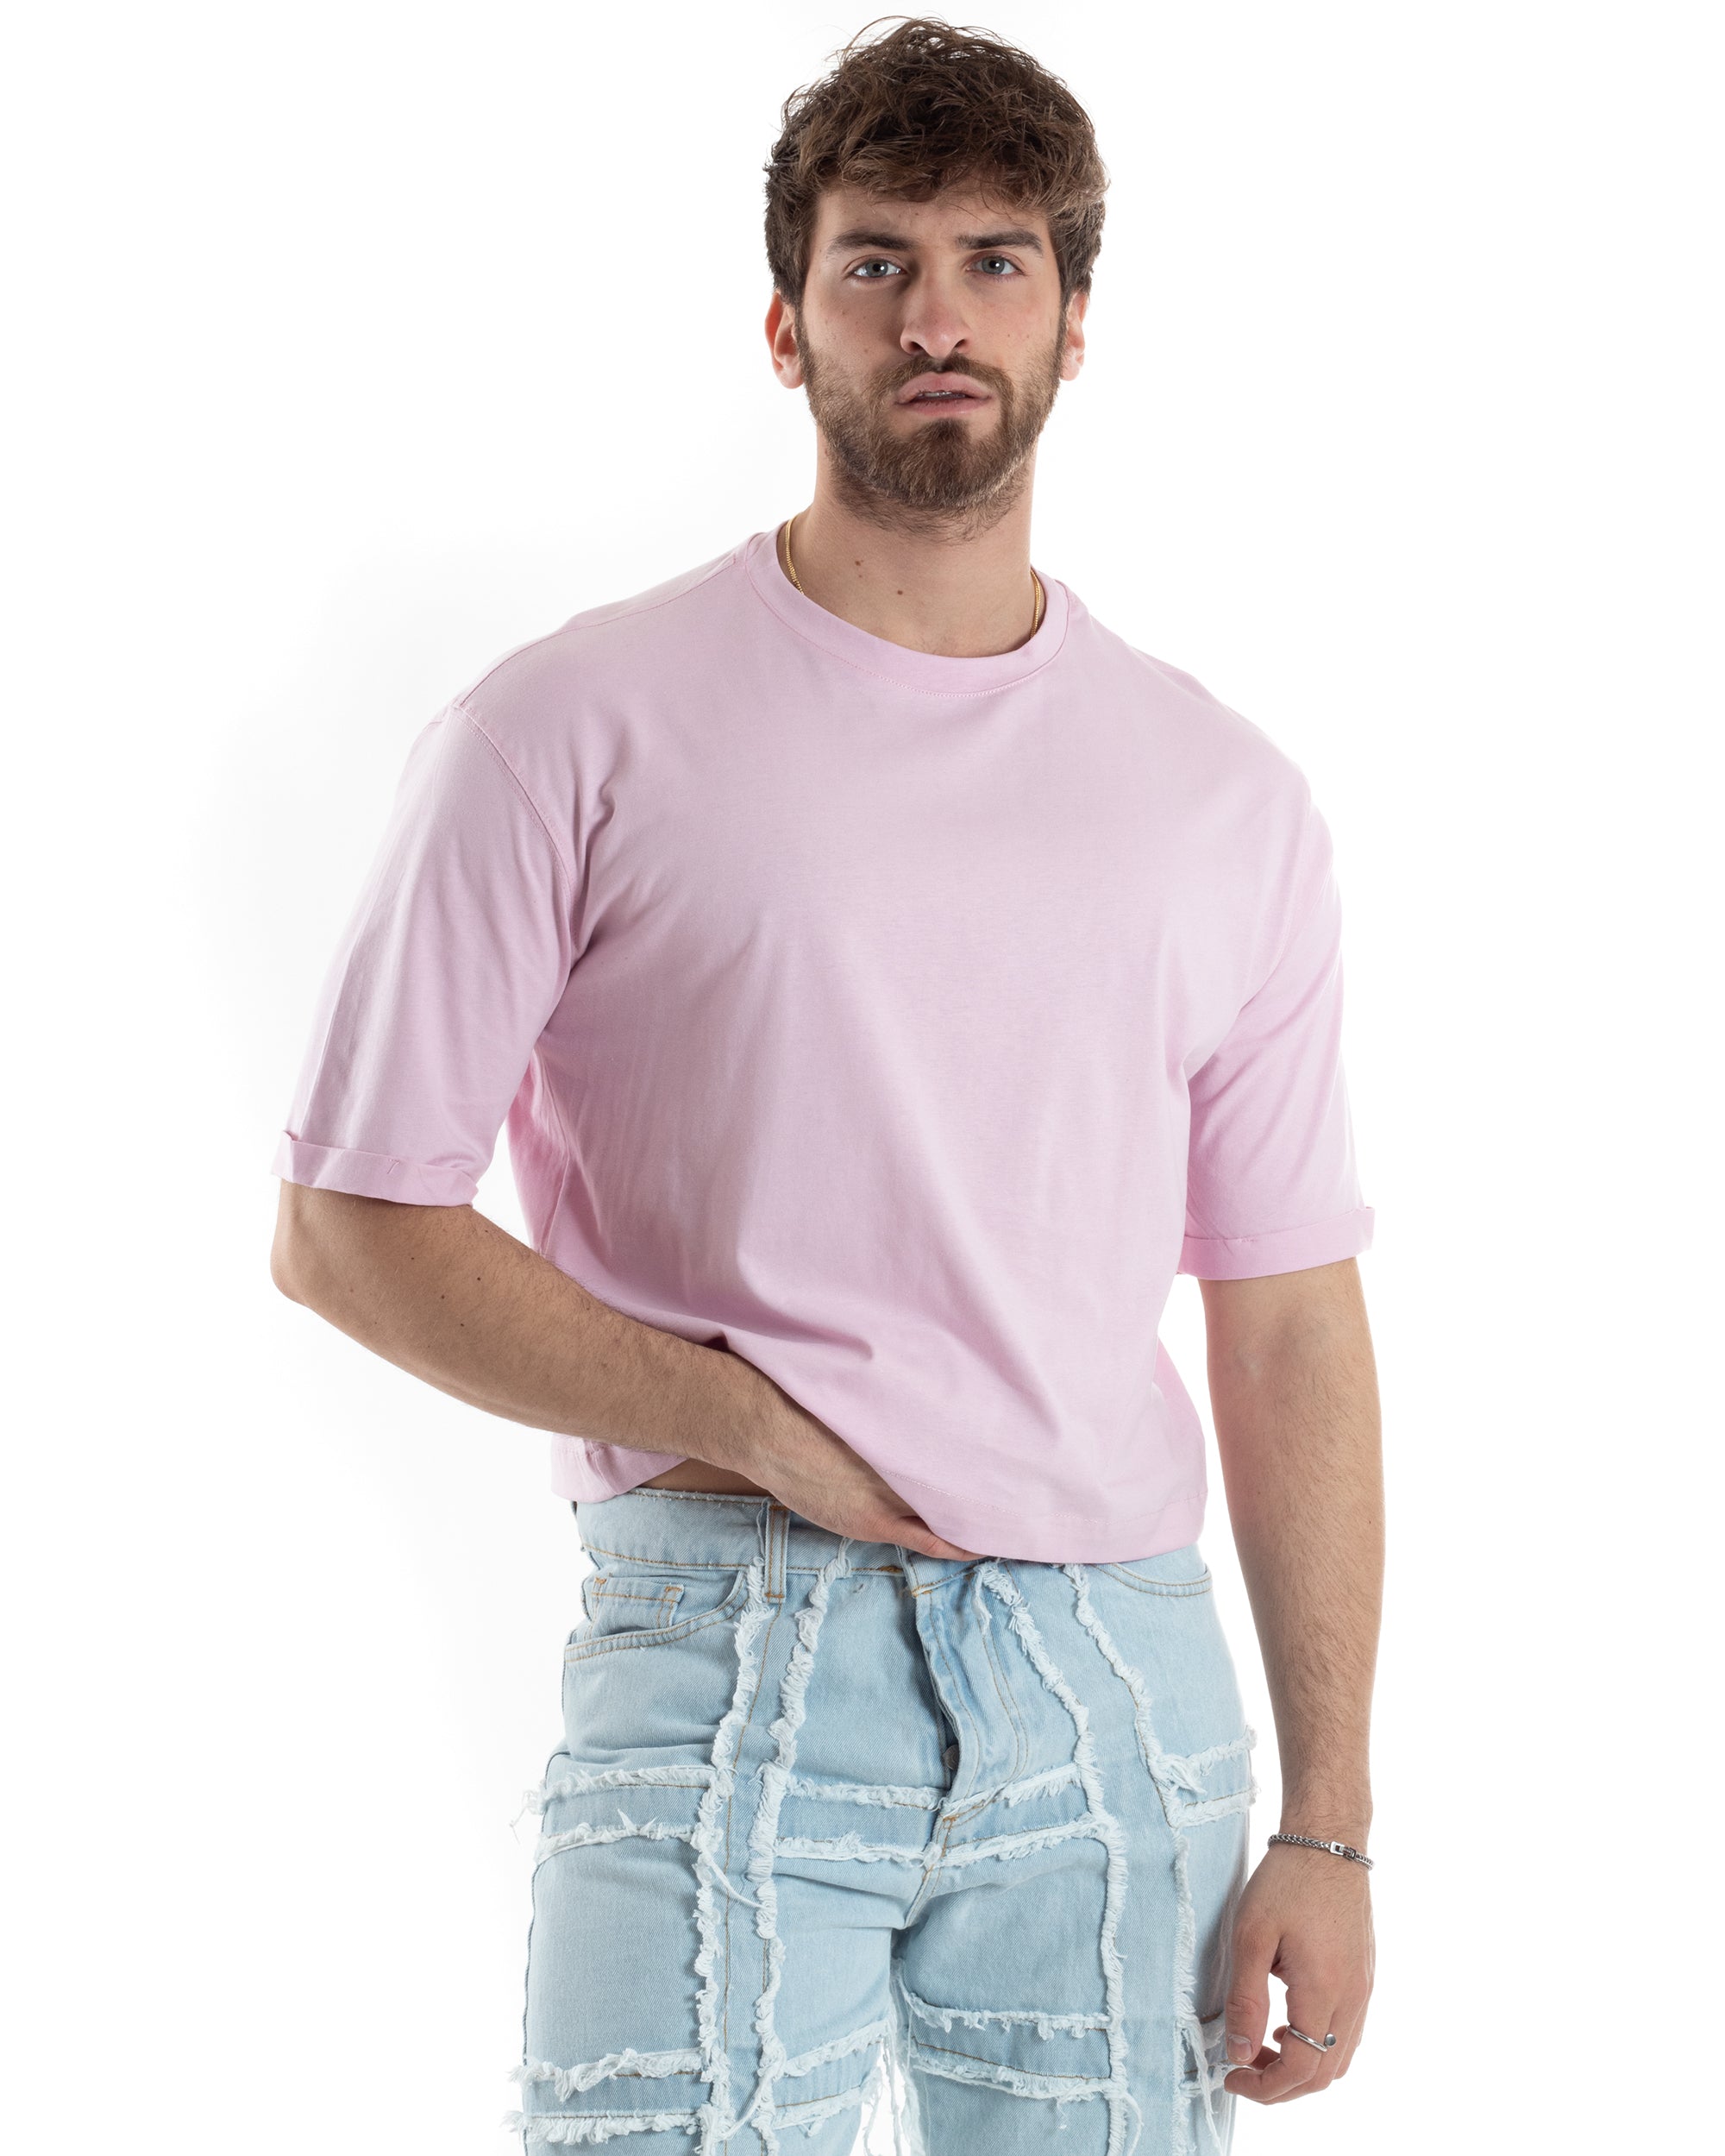 T-shirt Uomo Cropped Corta Boxy Fit Tinta Unita Rosa Casual GIOSAL-TS3003A